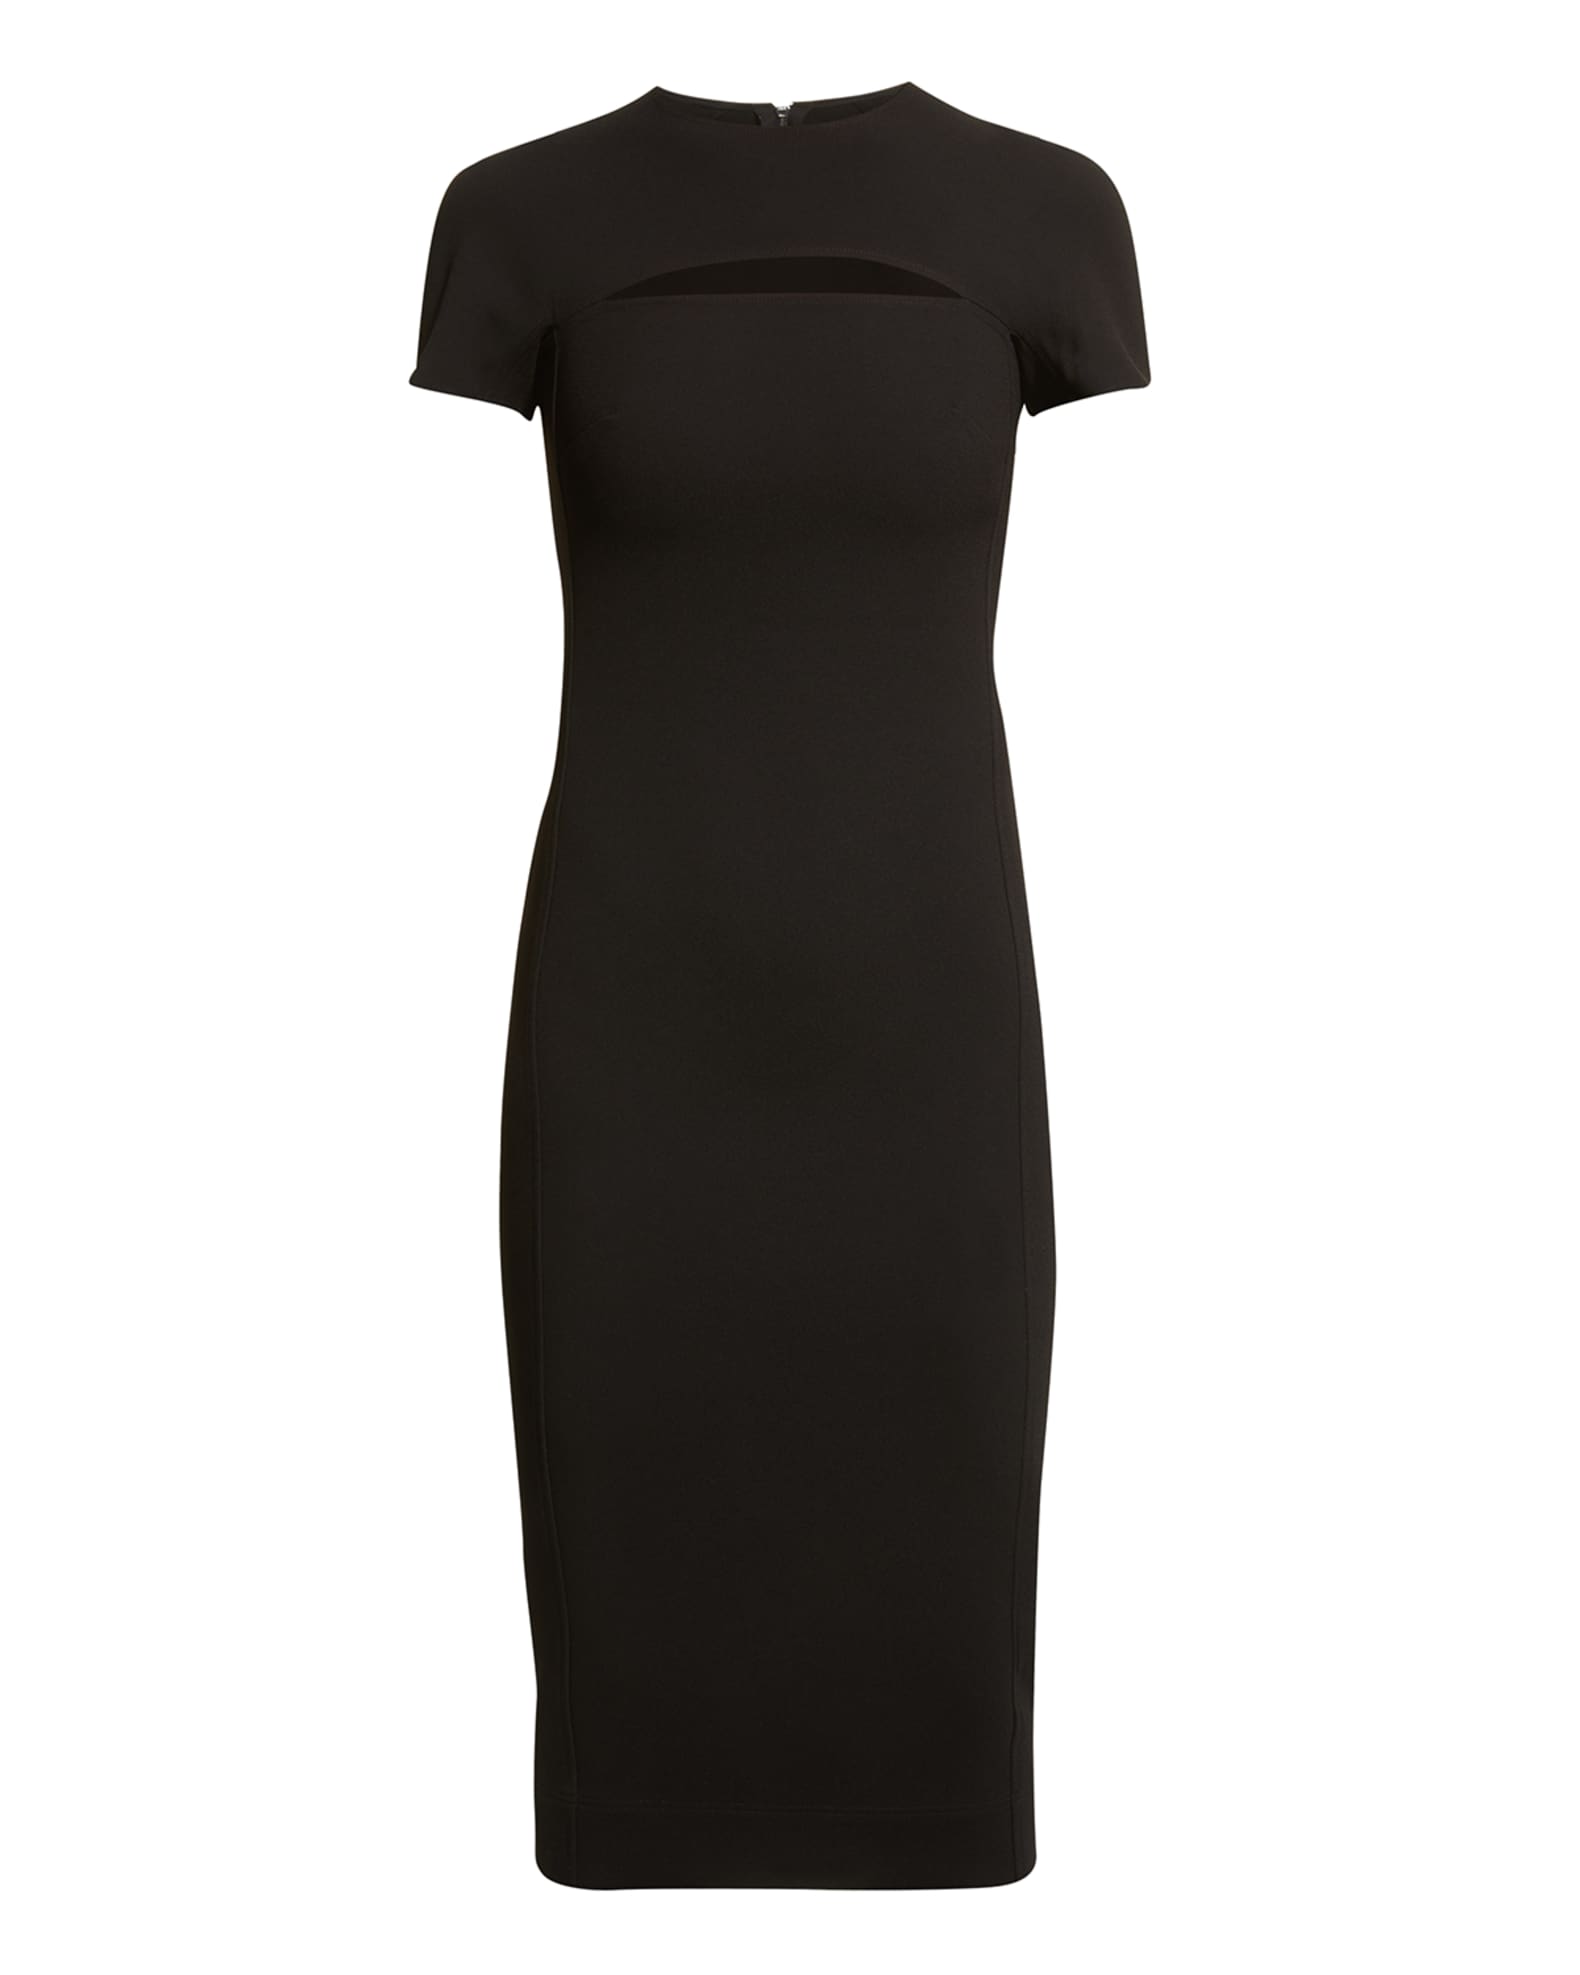 Victoria Beckham Peekaboo Cutout Sheath Dress | Neiman Marcus